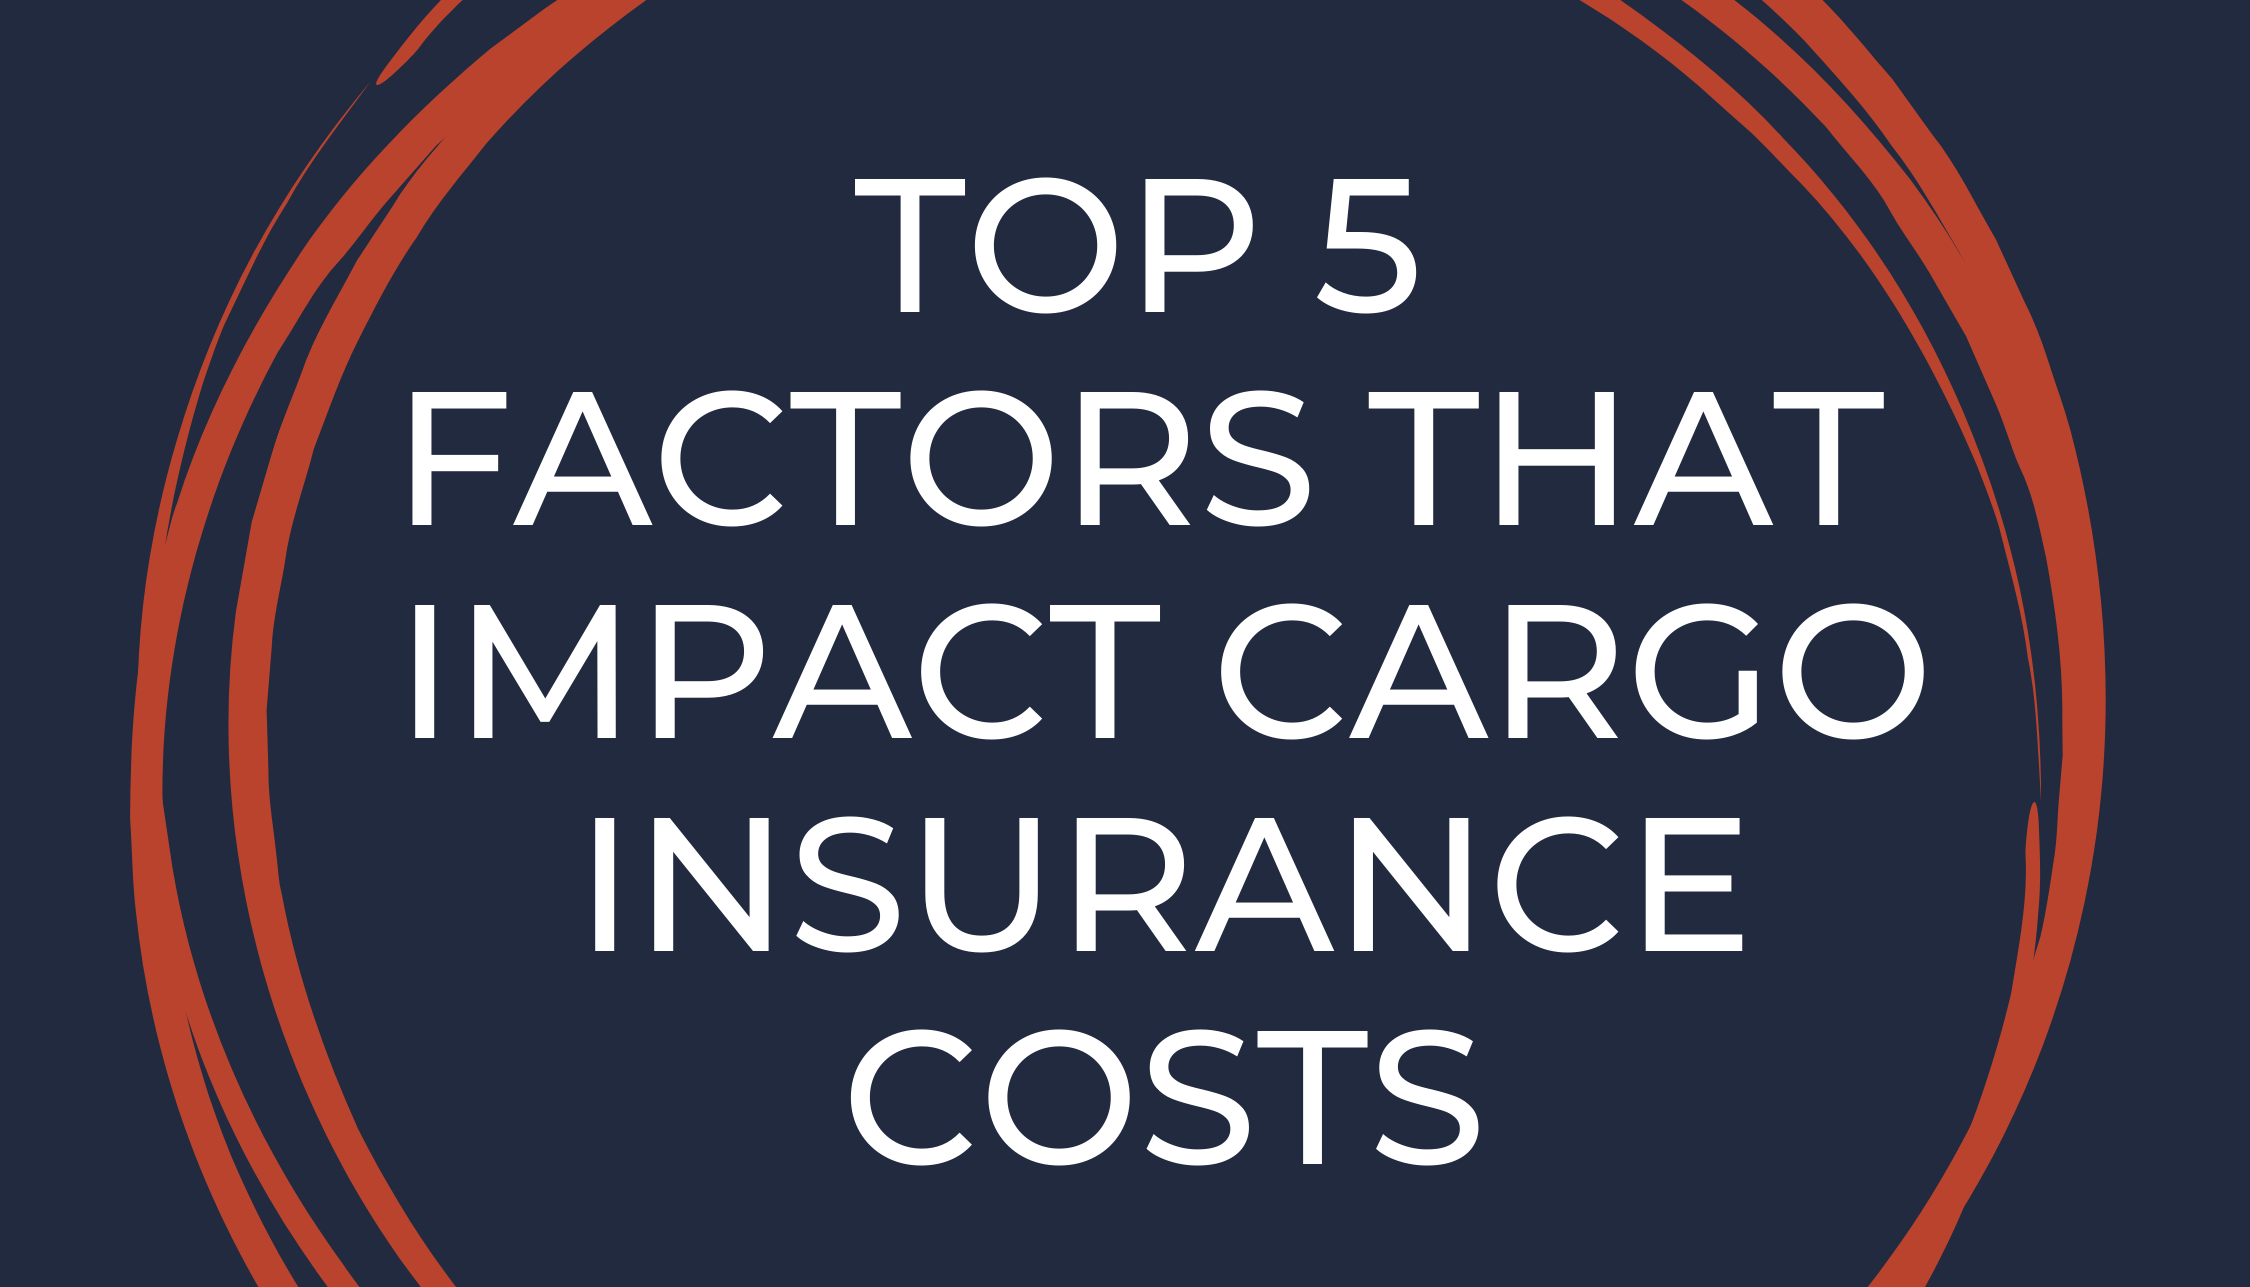 Top 5 Factors That Impact Cargo Insurance Costs